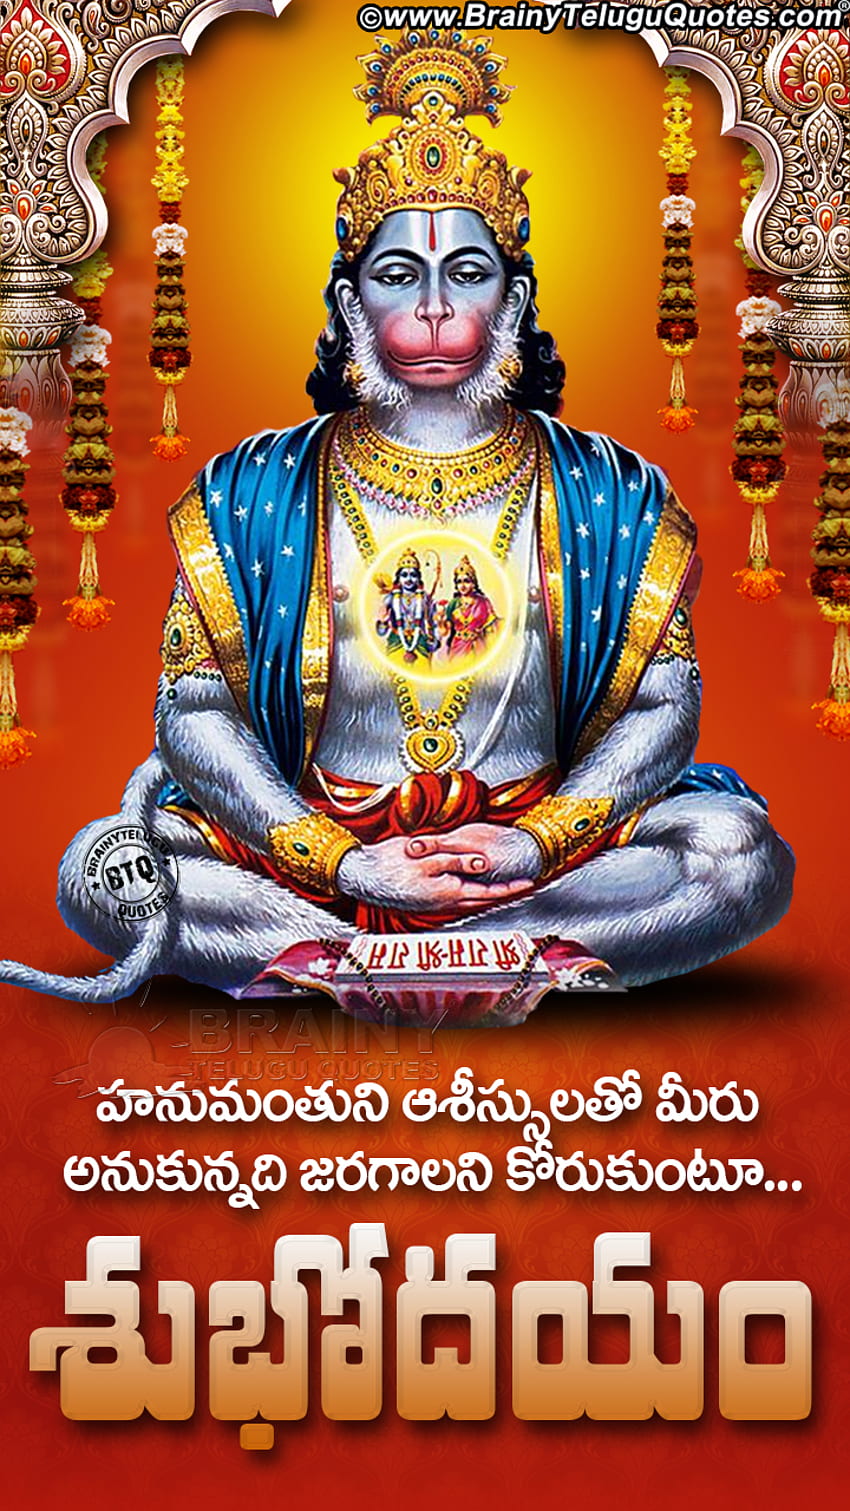 Jai Hanuman Lord Hanuman Blessings With Good Morning Telugu Quotes ...